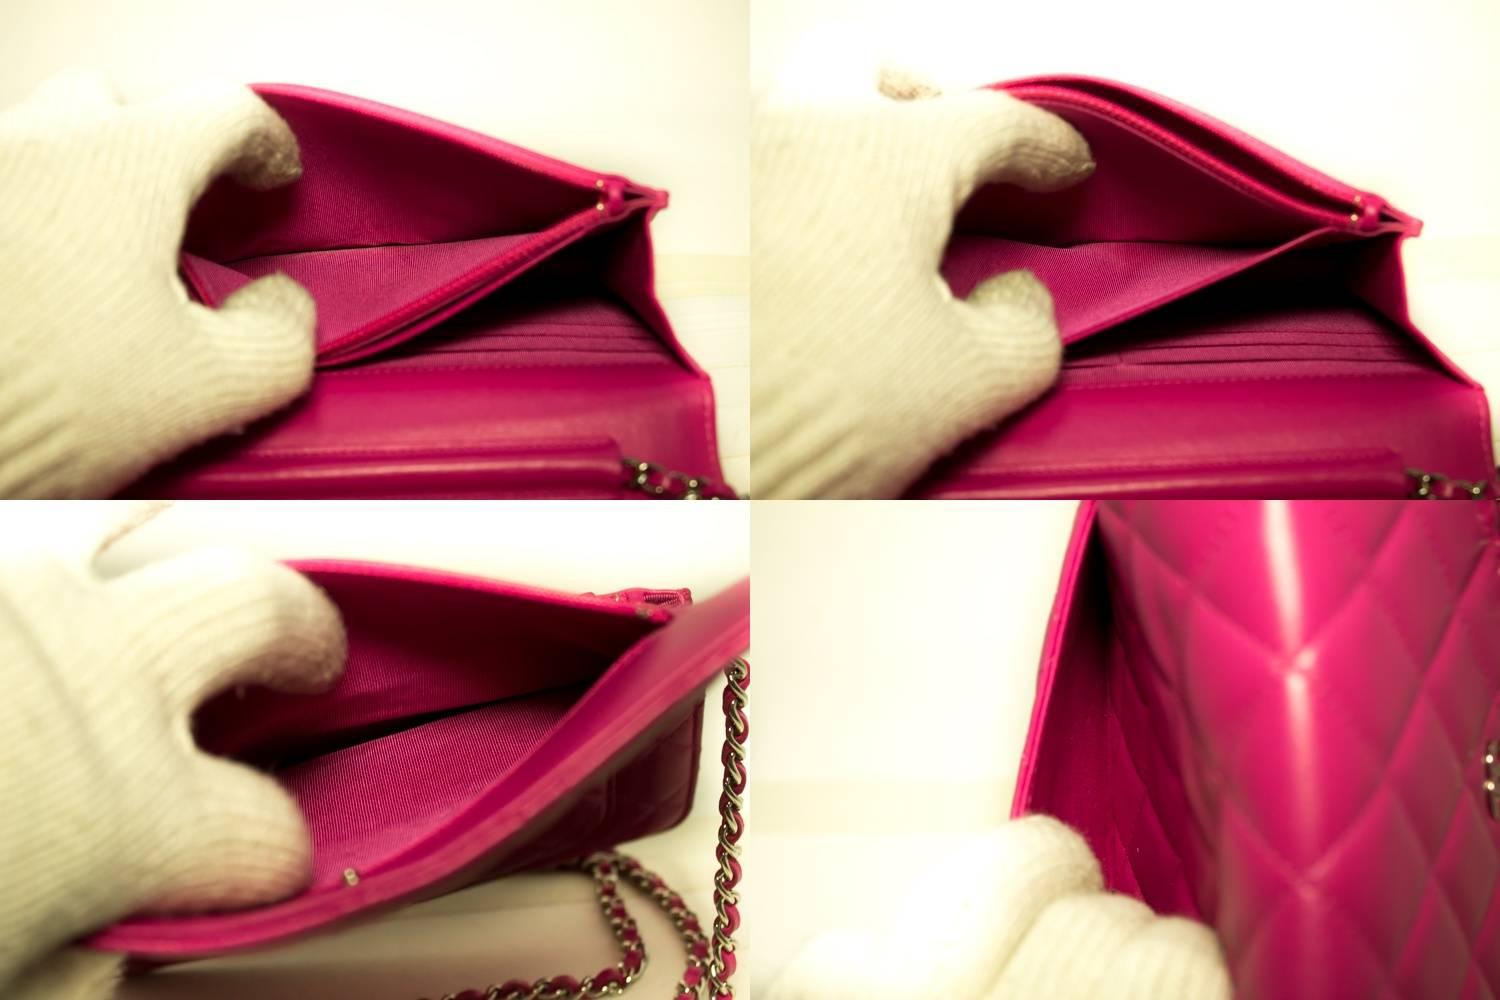 CHANEL Wallet On Chain WOC Hot Pink Shoulder Bag Crossbody Clutch 1